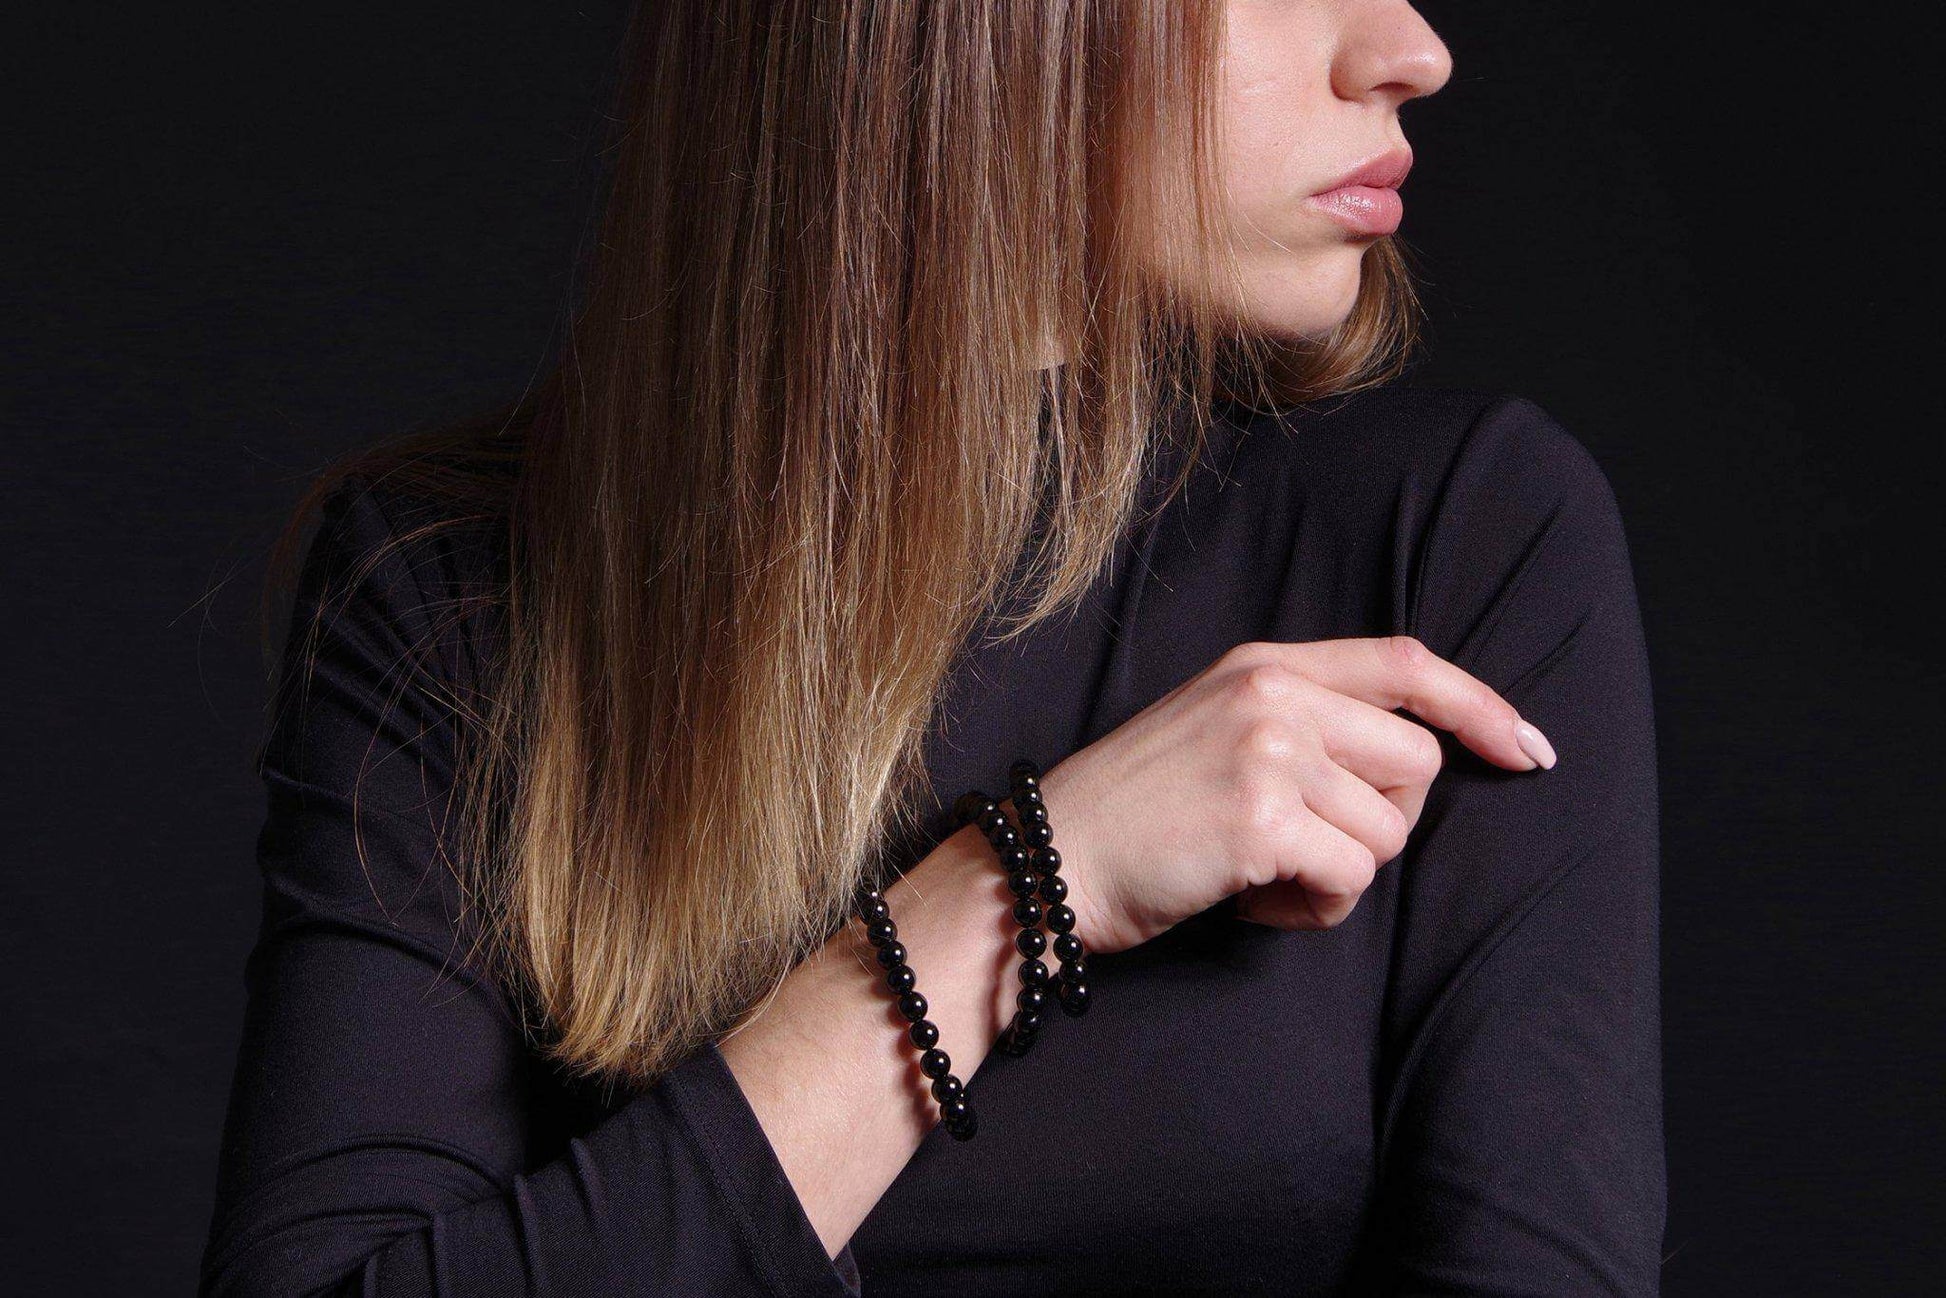 Black onyx bracelet – 8mm